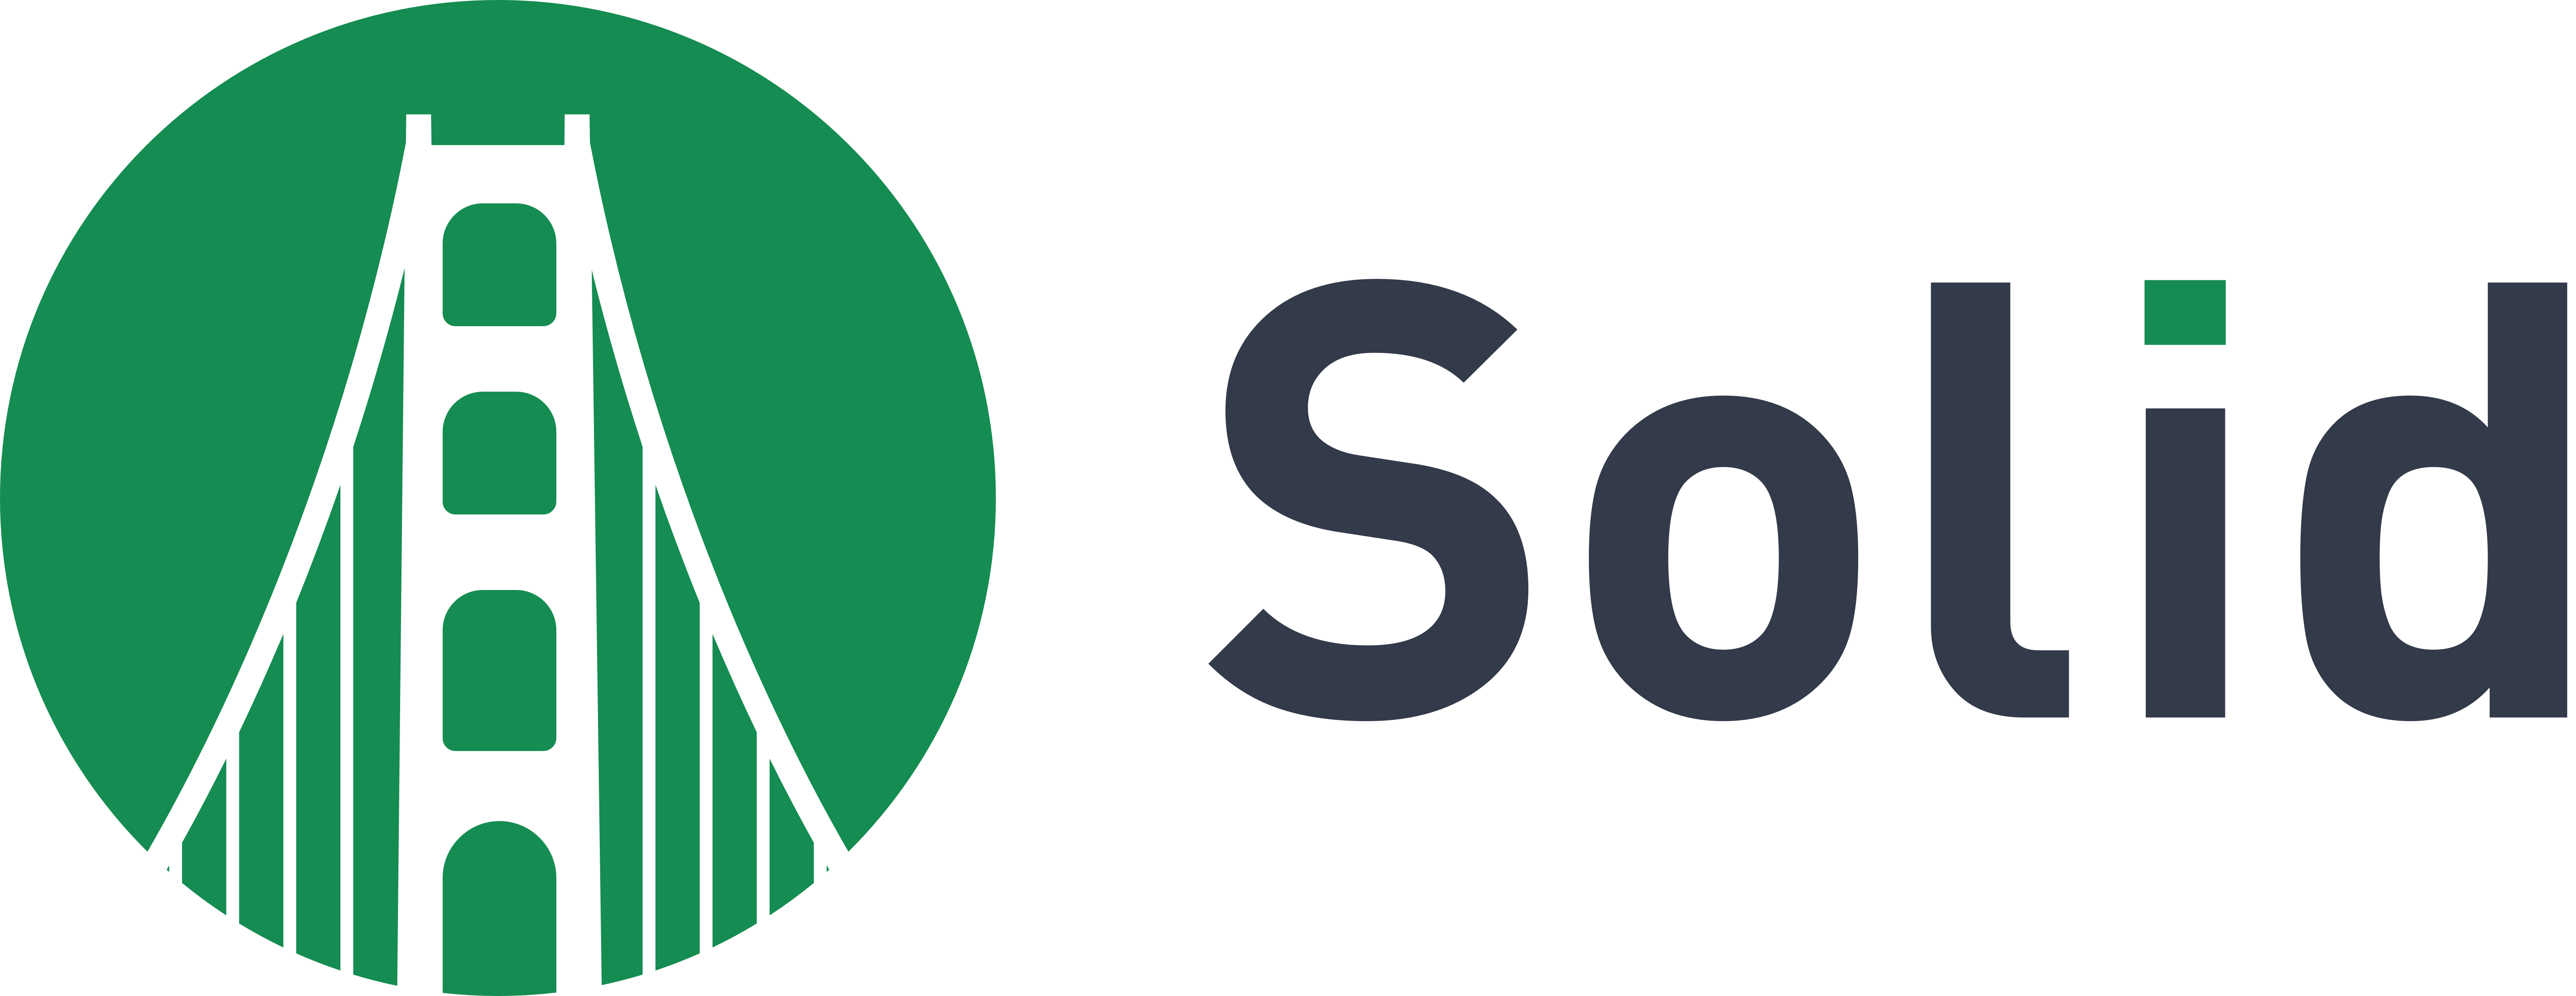 Solid - Fintech Company